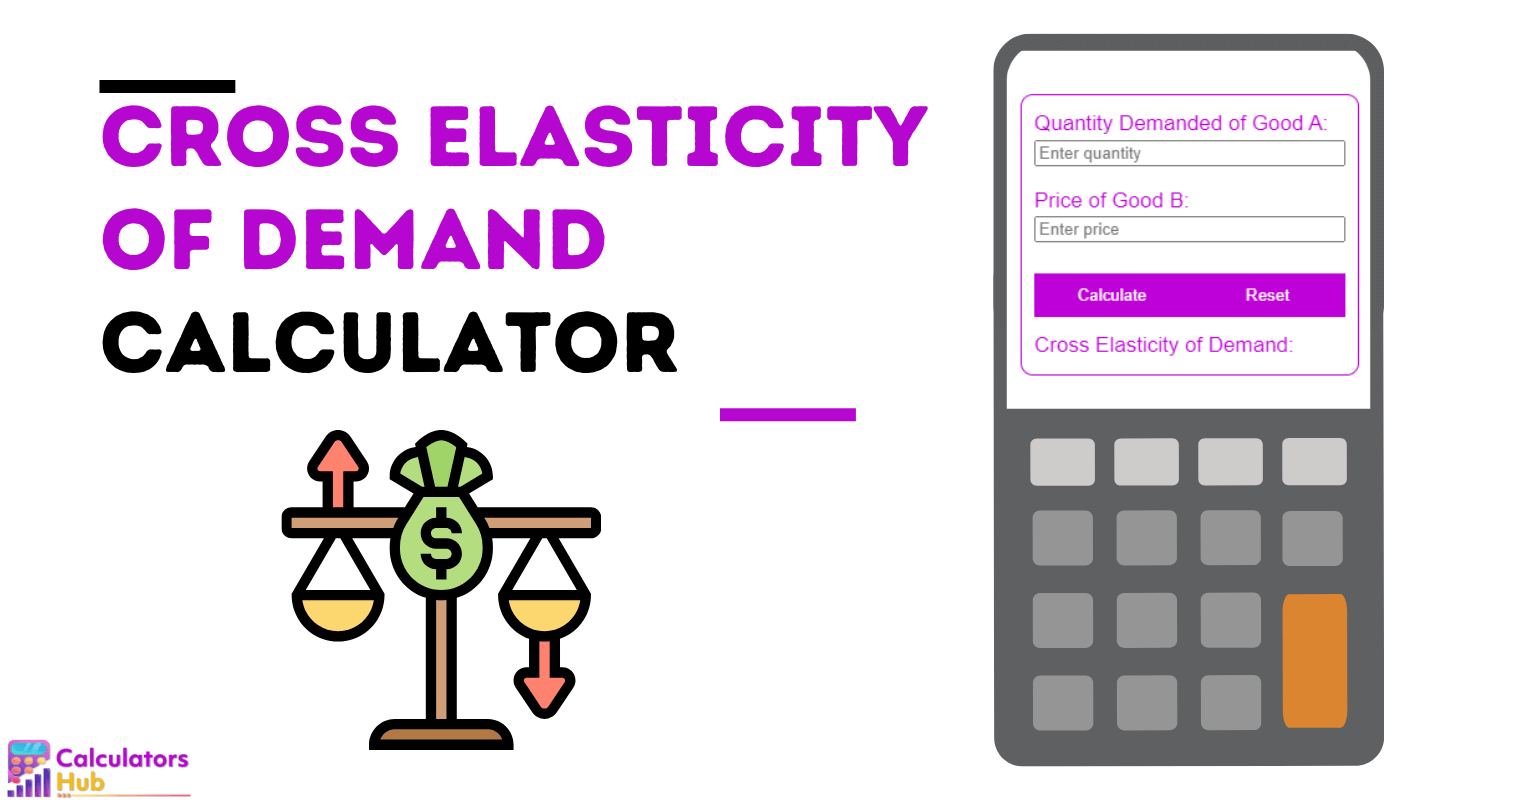 Cross Elasticity of Demand Calculator